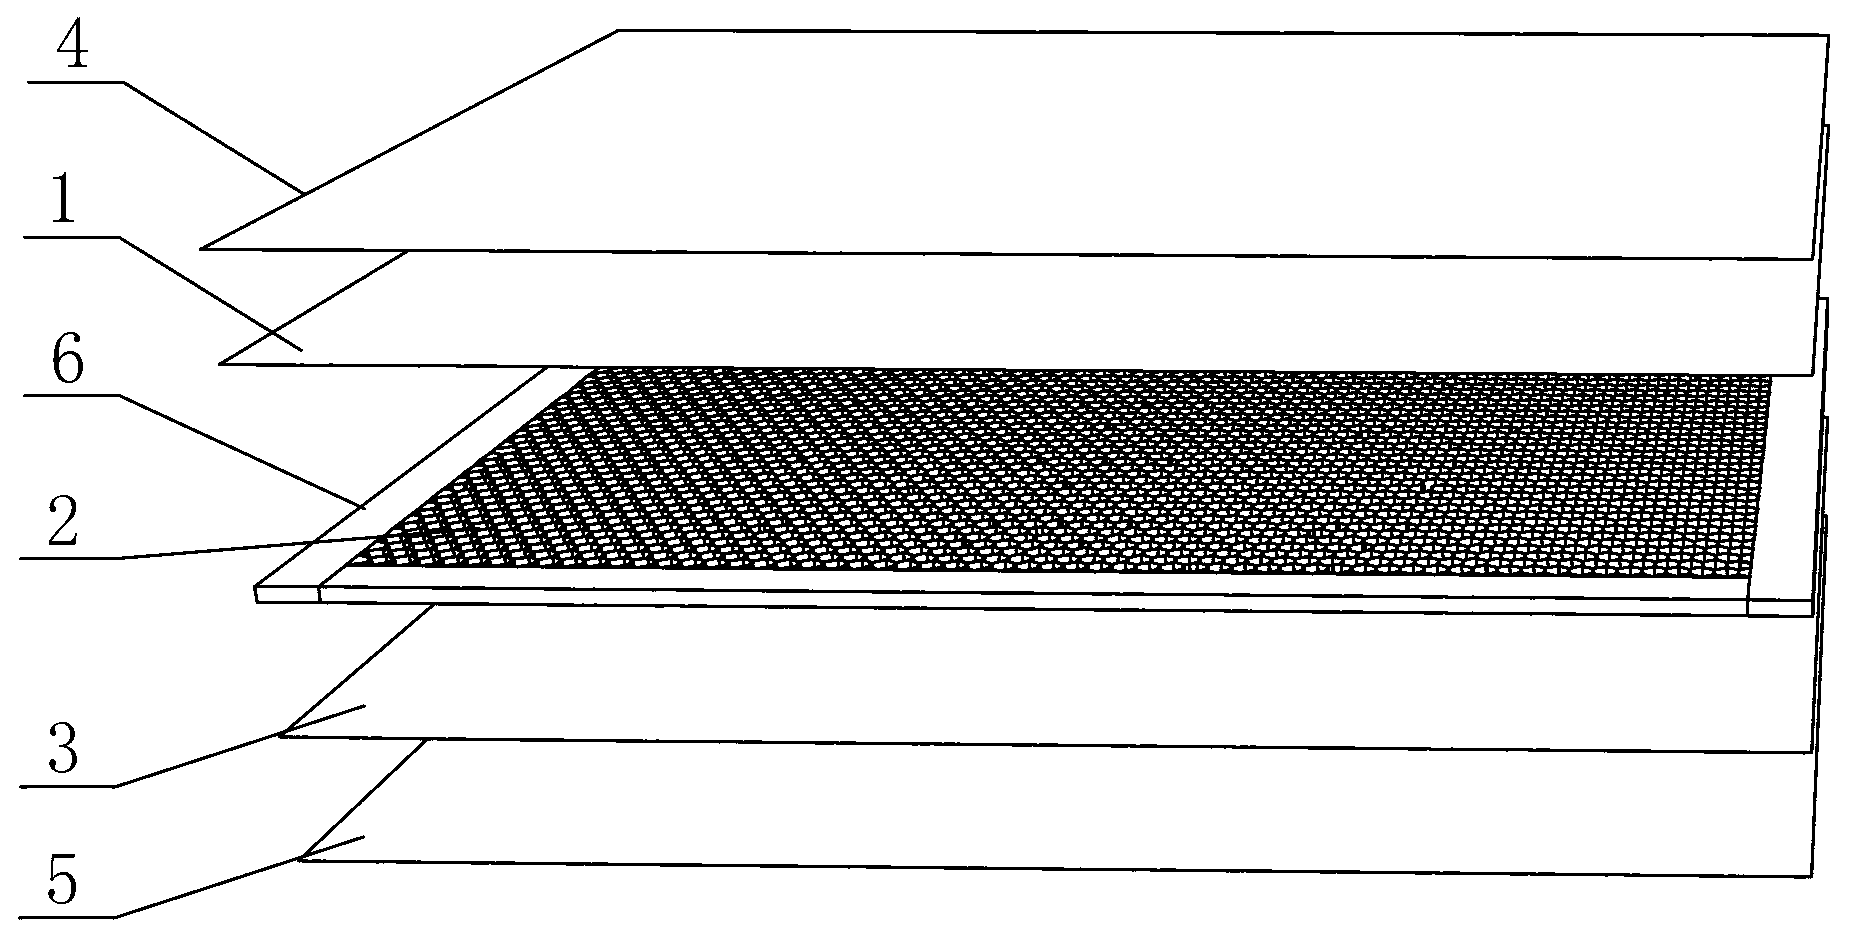 Environment-friendly rectangular composite plate